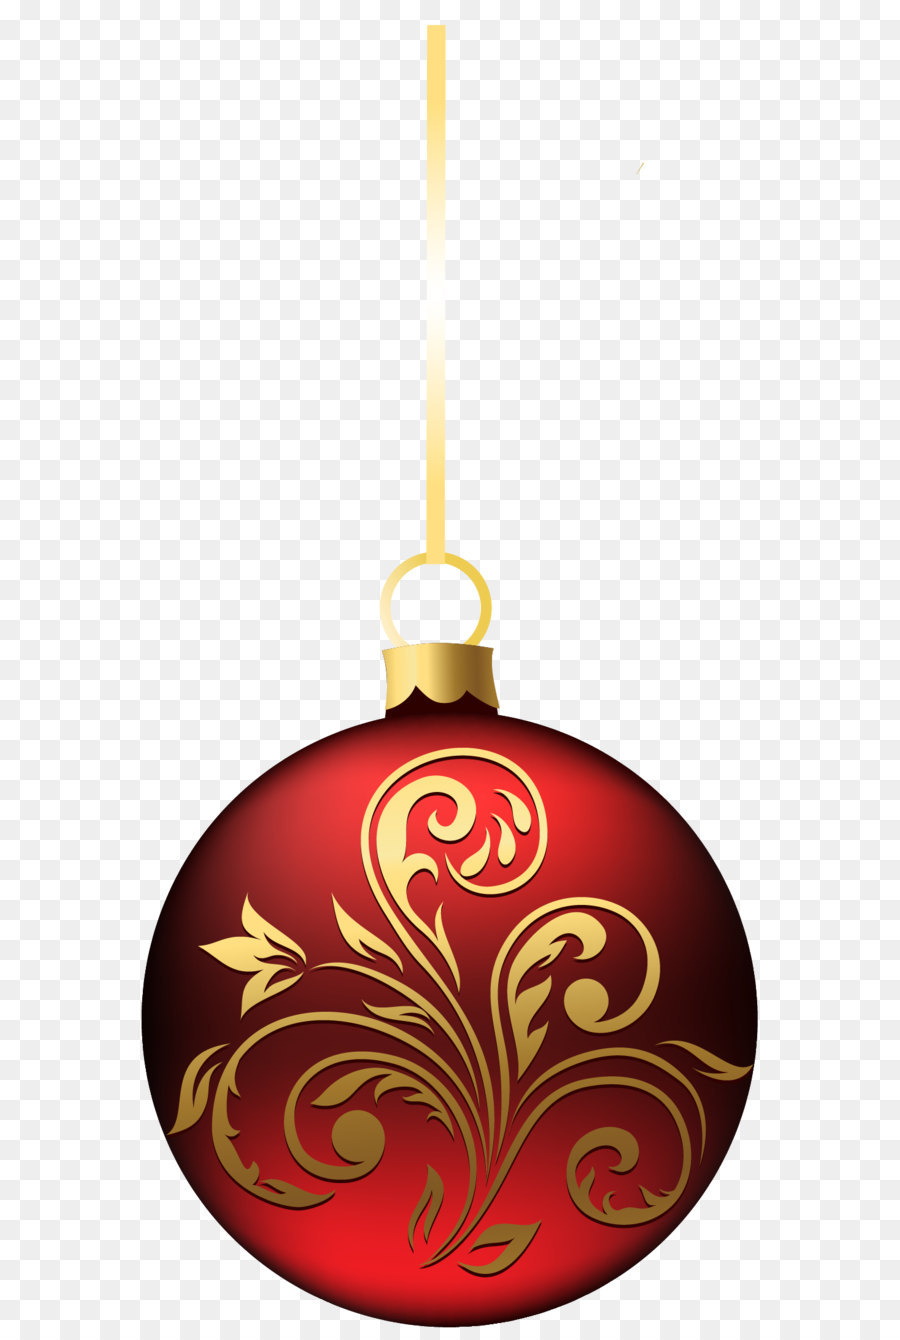 Christmas ornament Clip art - Christmas balls png download - 1200*2035 ...